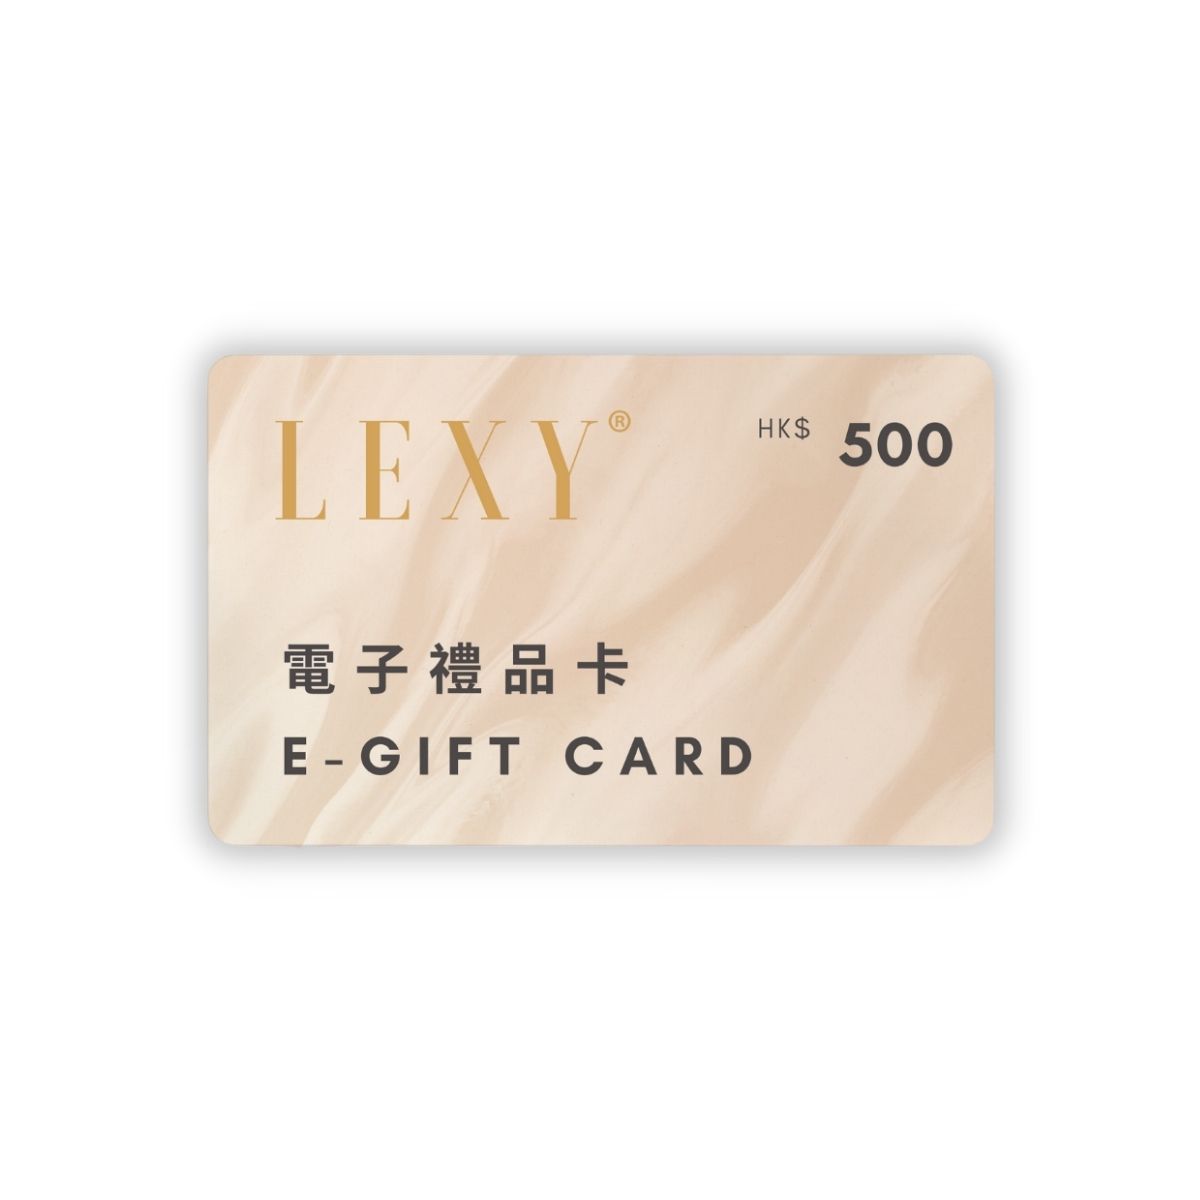 LEXY ® LEXY ® e-Gift Cards 電子禮品卡 Gift Cards HK$500.00 購買